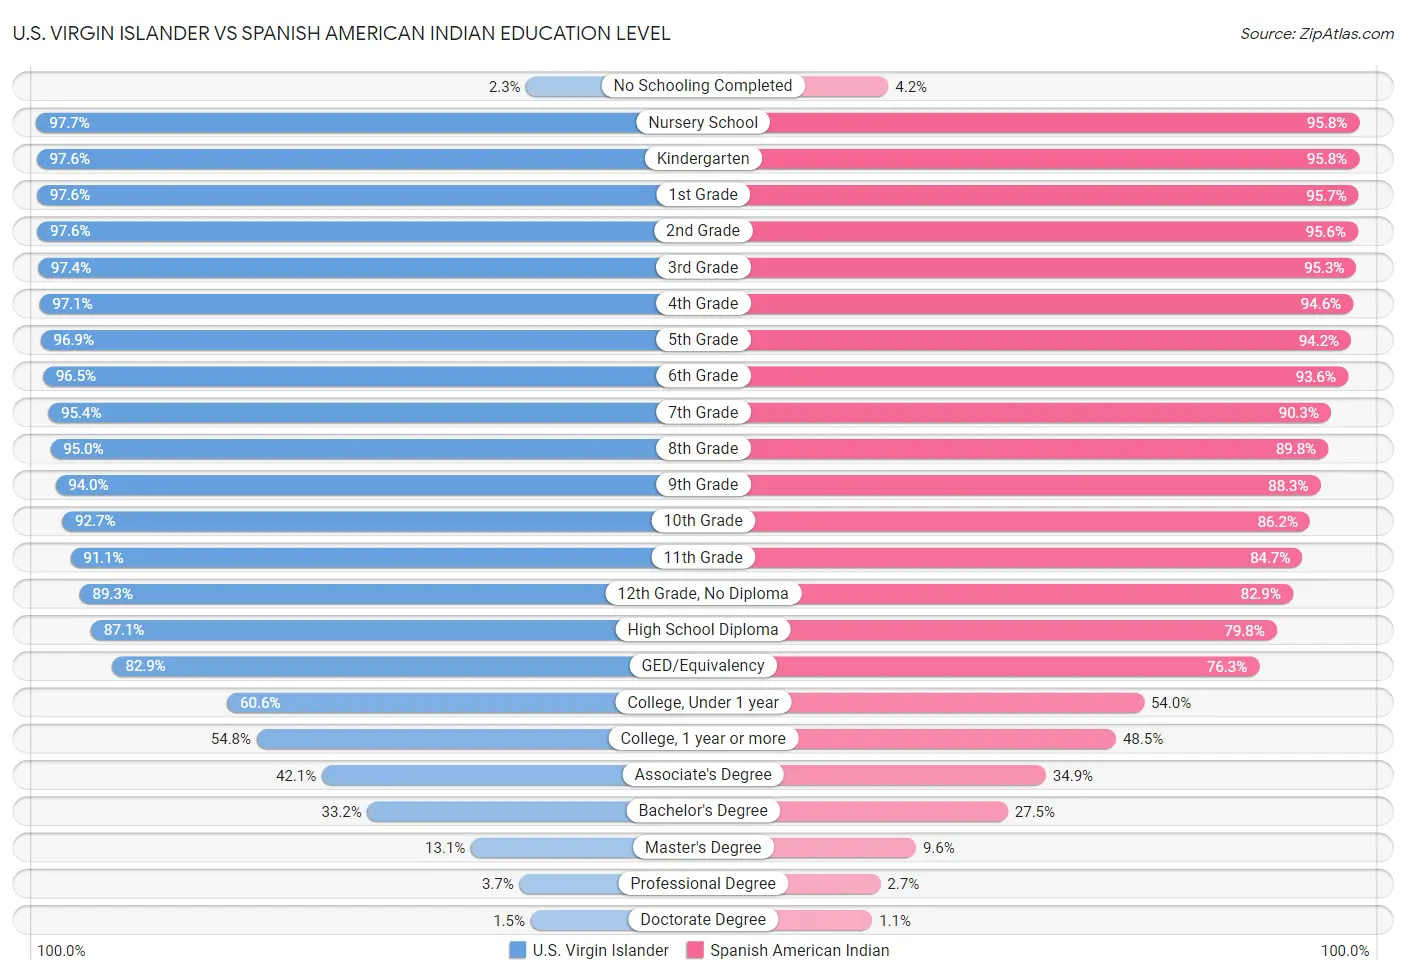 U.S. Virgin Islander vs Spanish American Indian Education Level